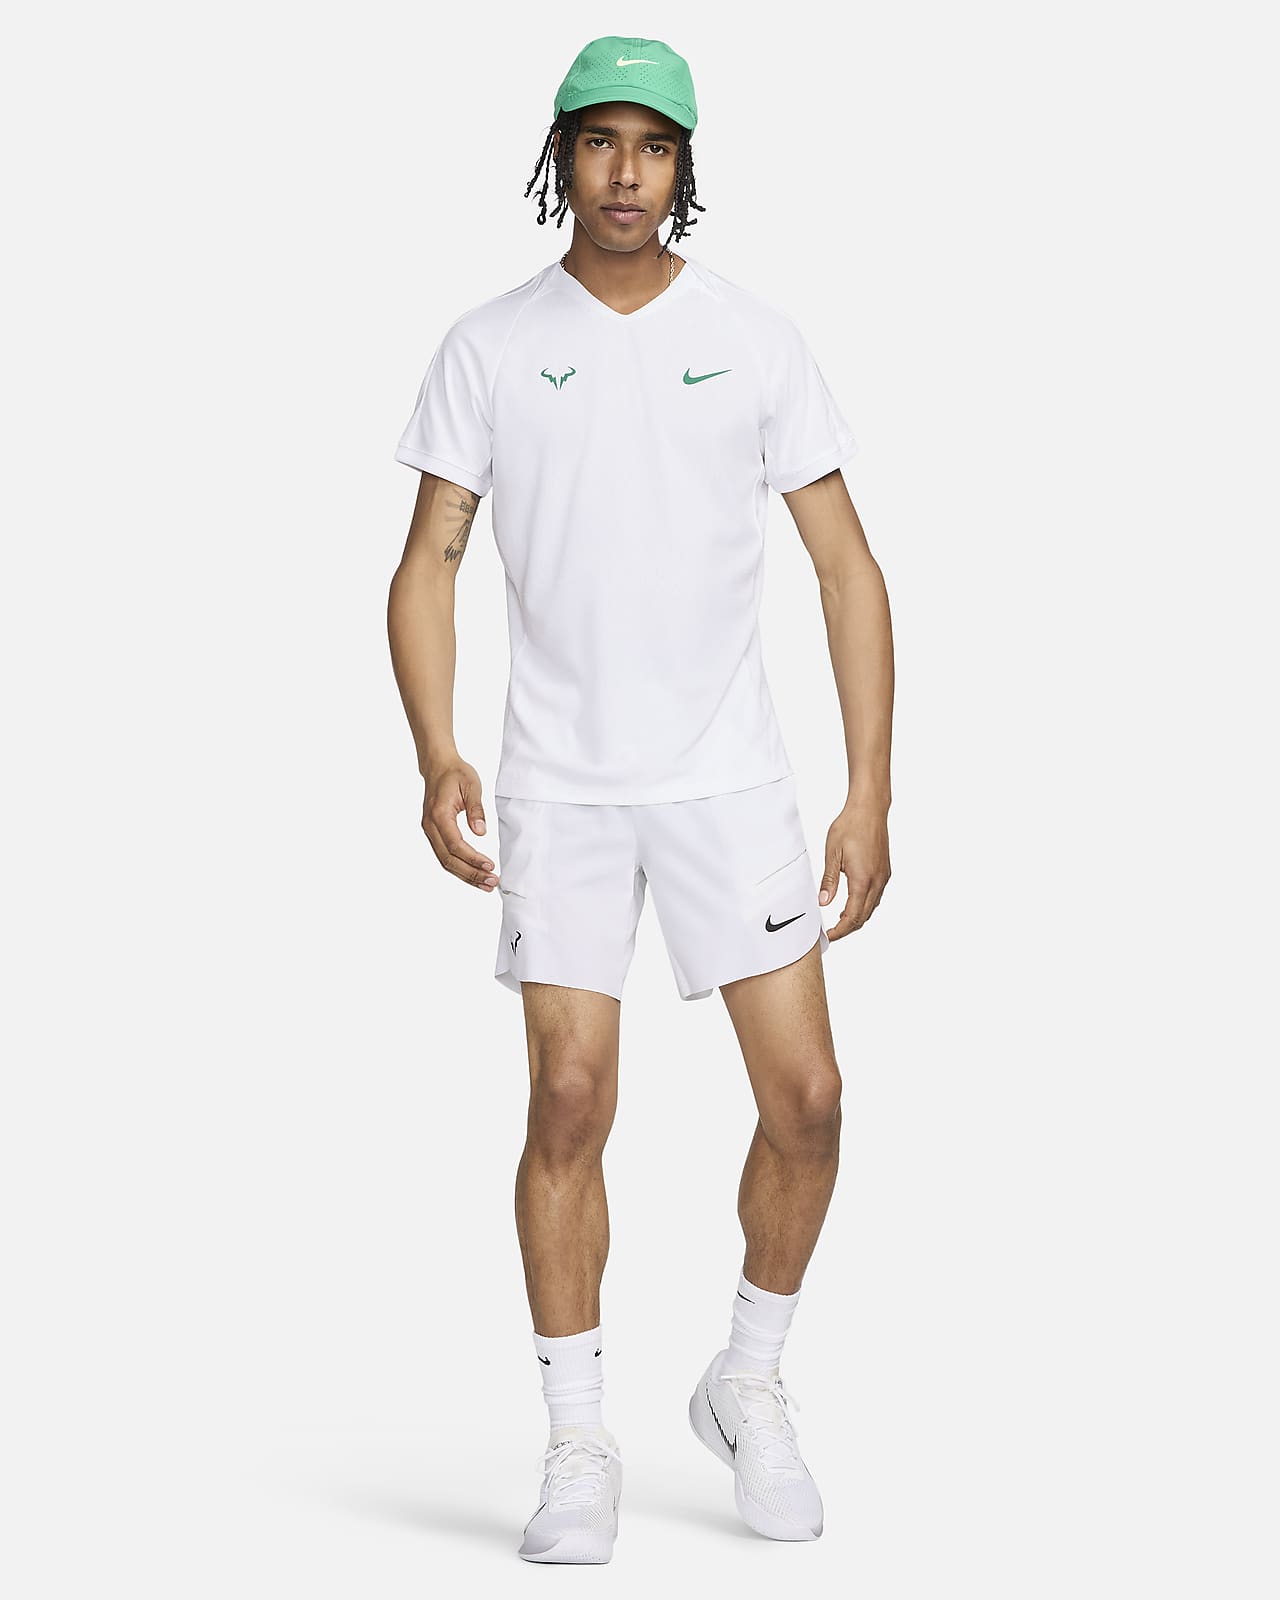 Rafa Men's Dri-FIT ADV Short-Sleeve Tennis Top